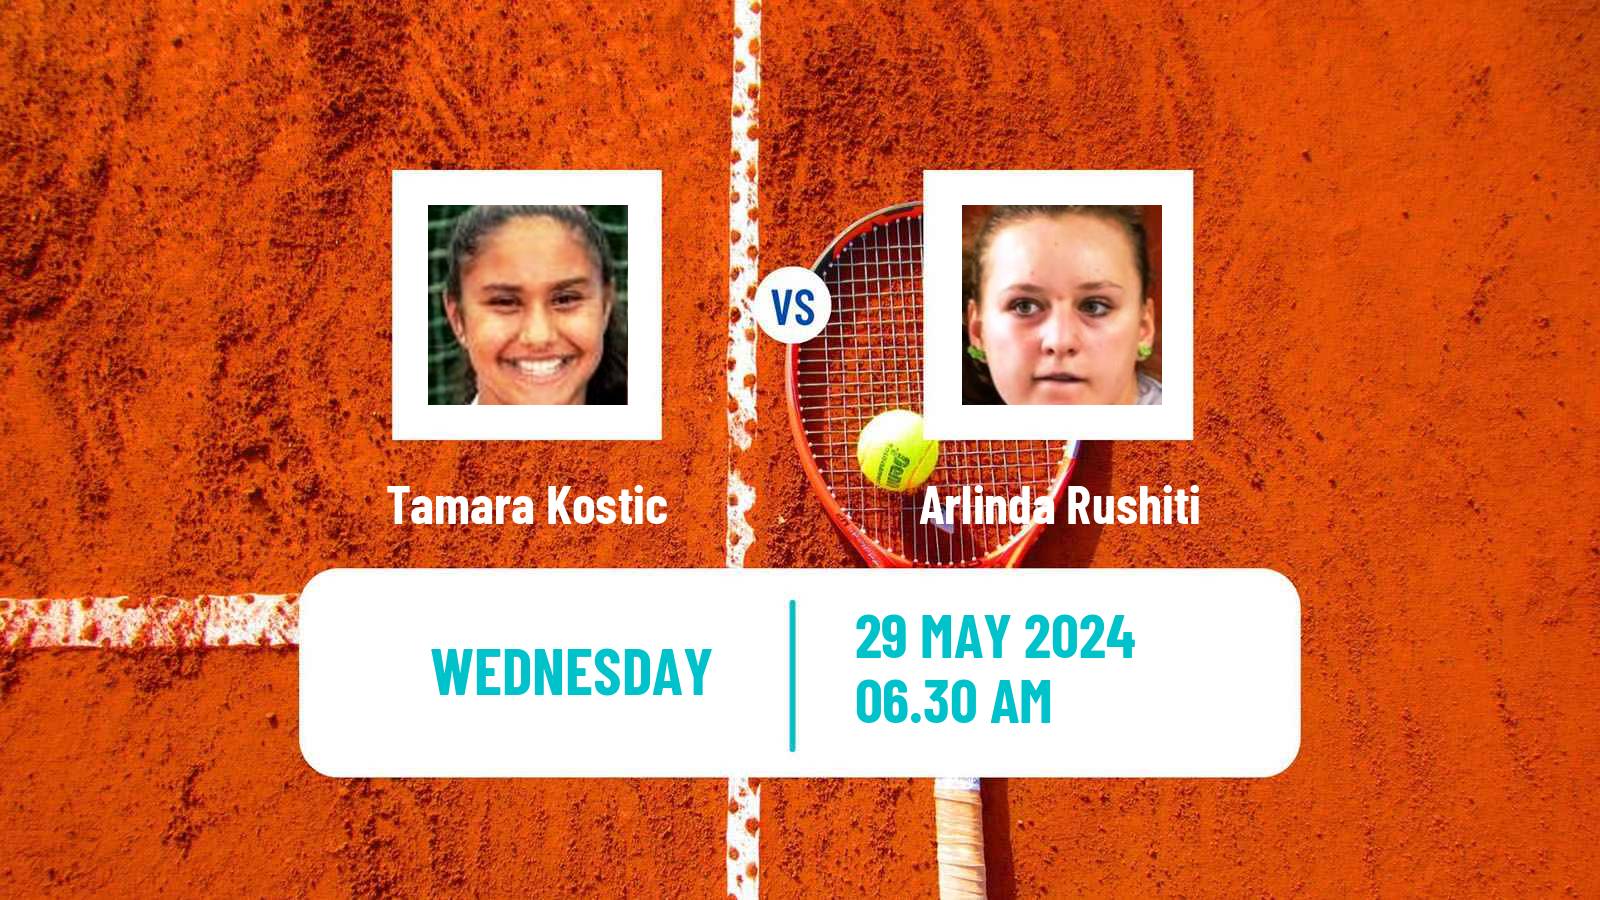 Tennis ITF W35 La Marsa Women Tamara Kostic - Arlinda Rushiti